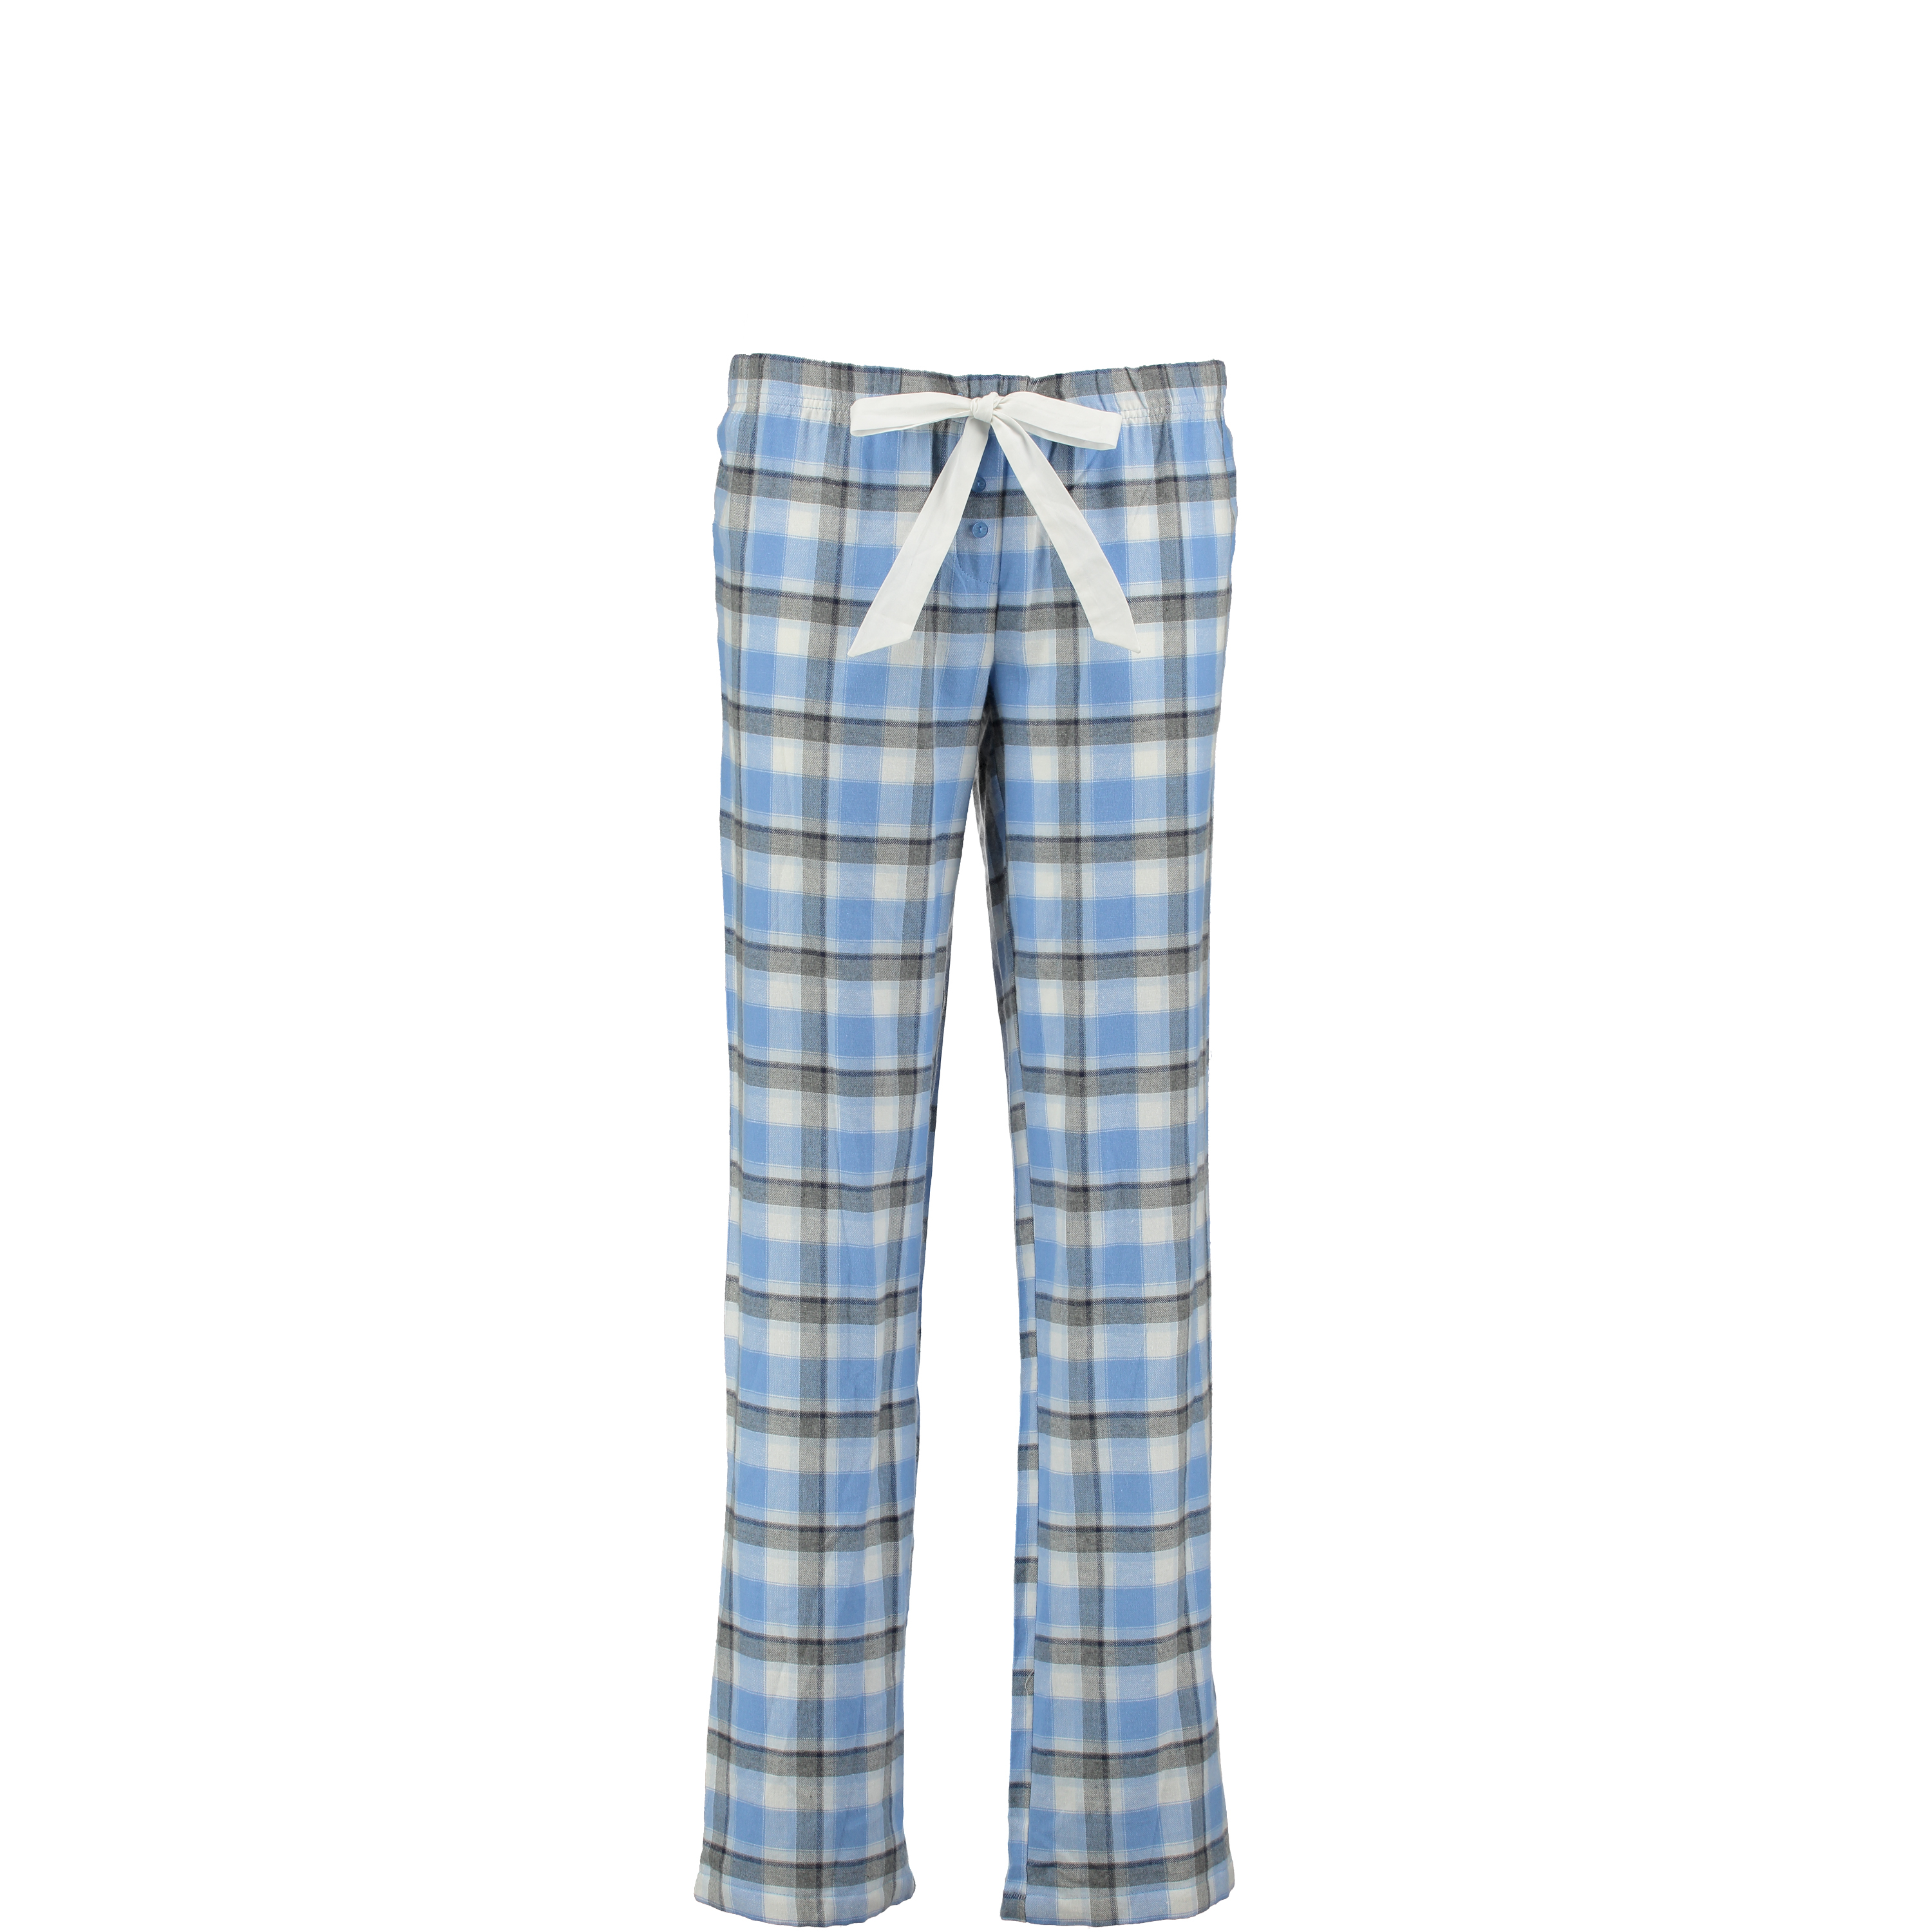 Pyjama pants Papillon butterfly, Azul, main